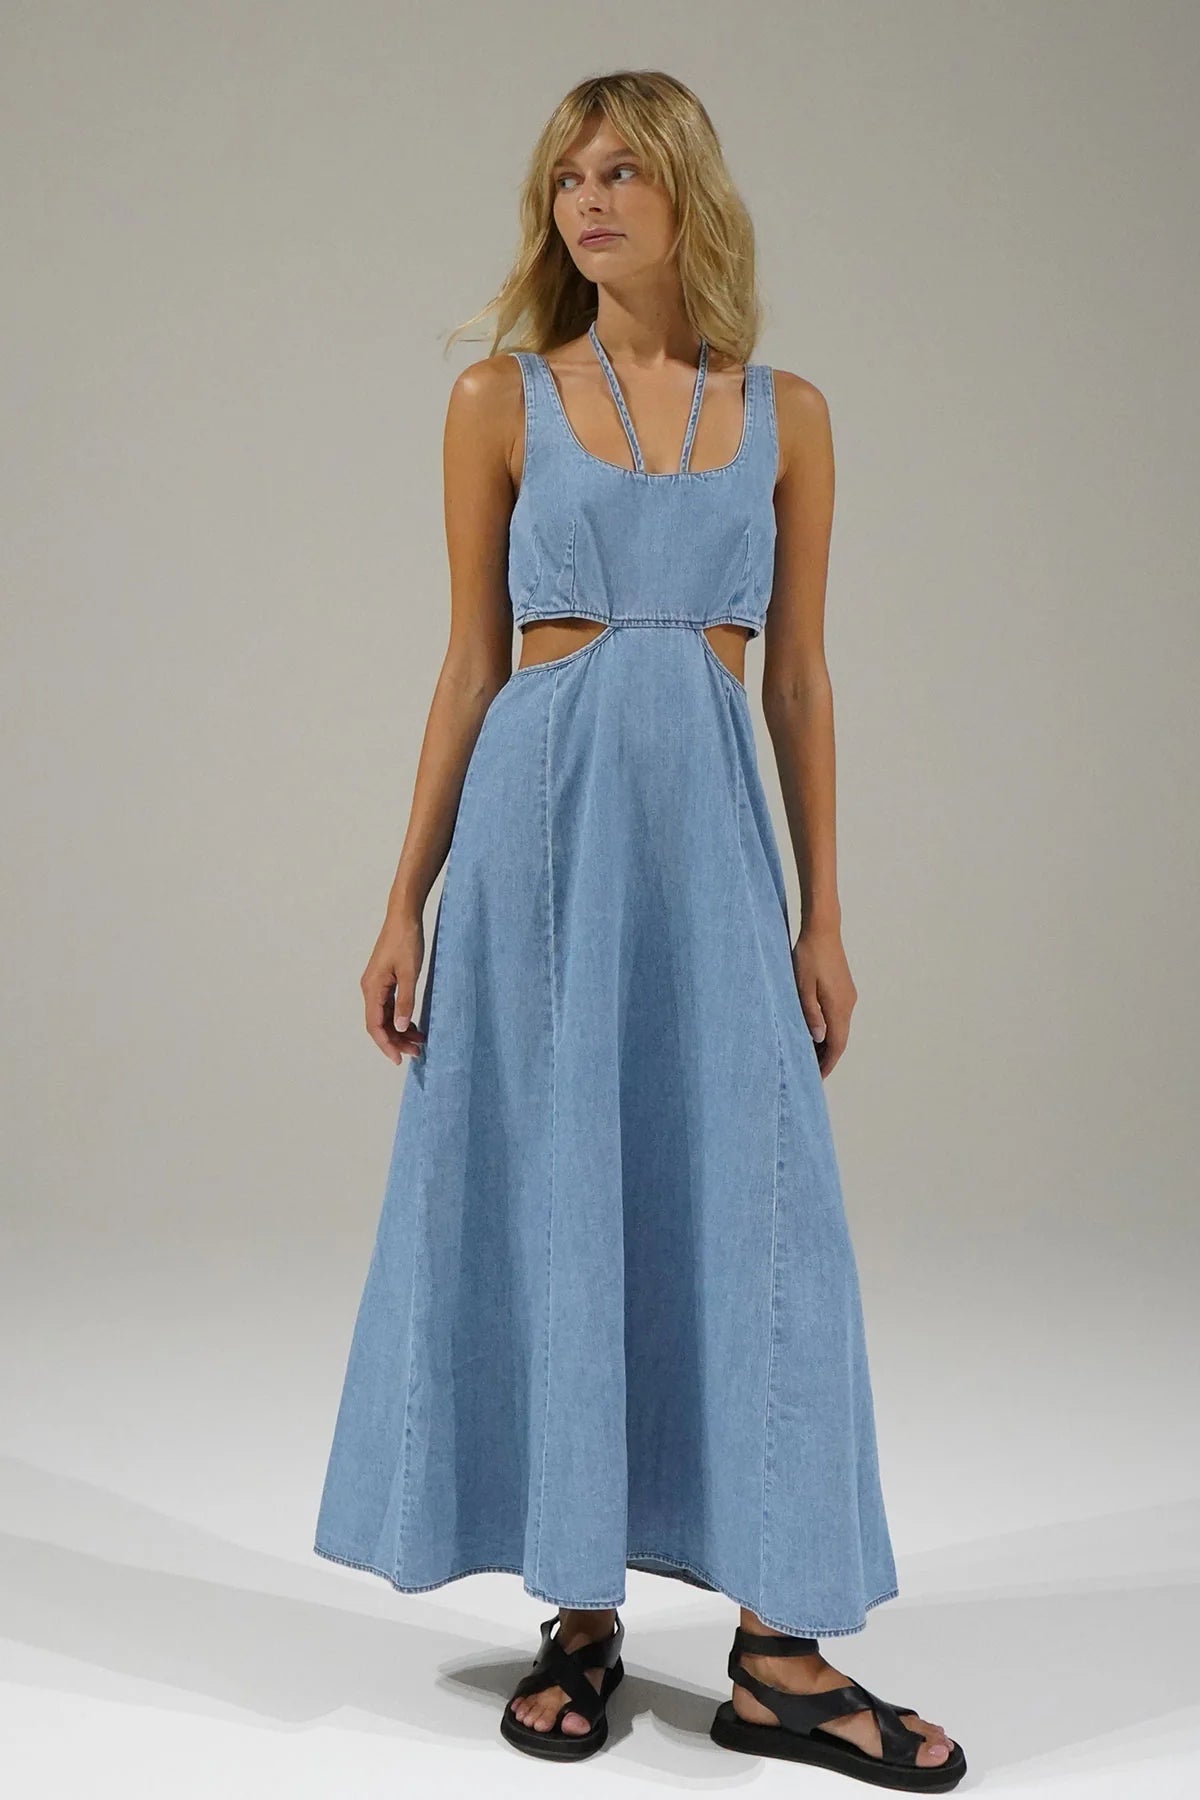 LNA Lorelei Chambray Dress in Faded Blue - Estilo Boutique